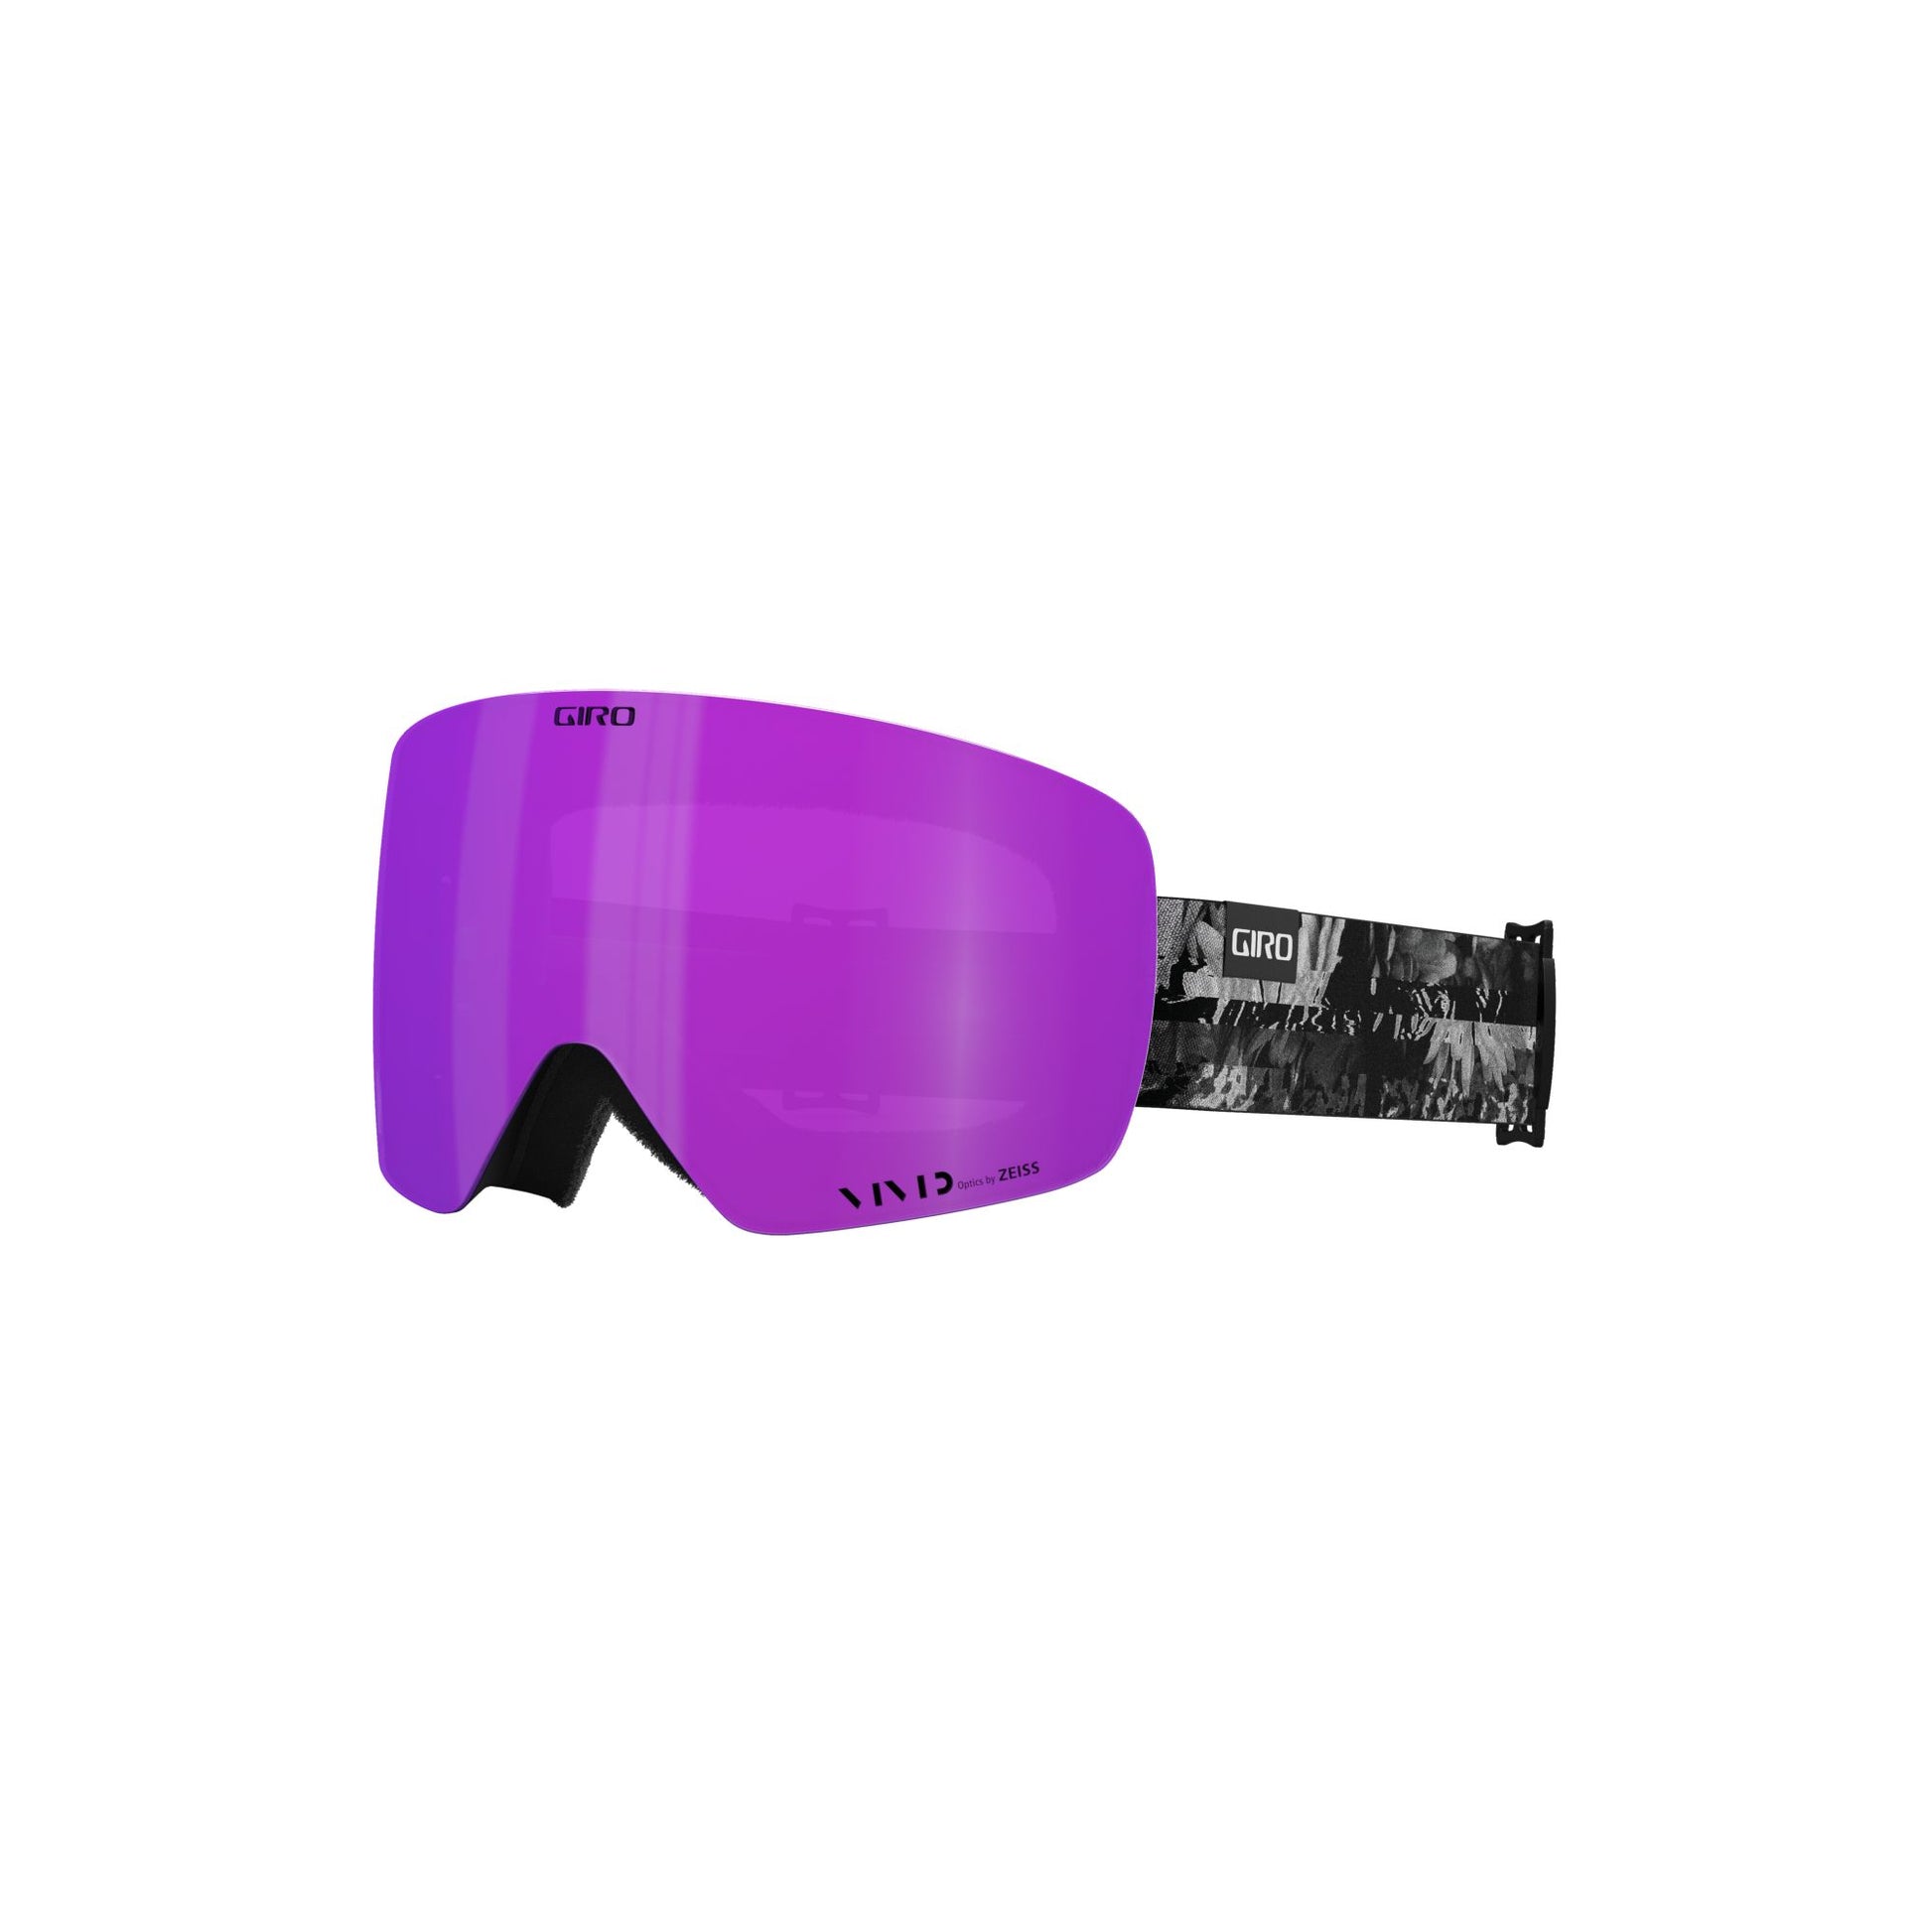 Giro Women's Contour RS Snow Goggles Black/White Flower Data Mosh/Vivid Pink Snow Goggles